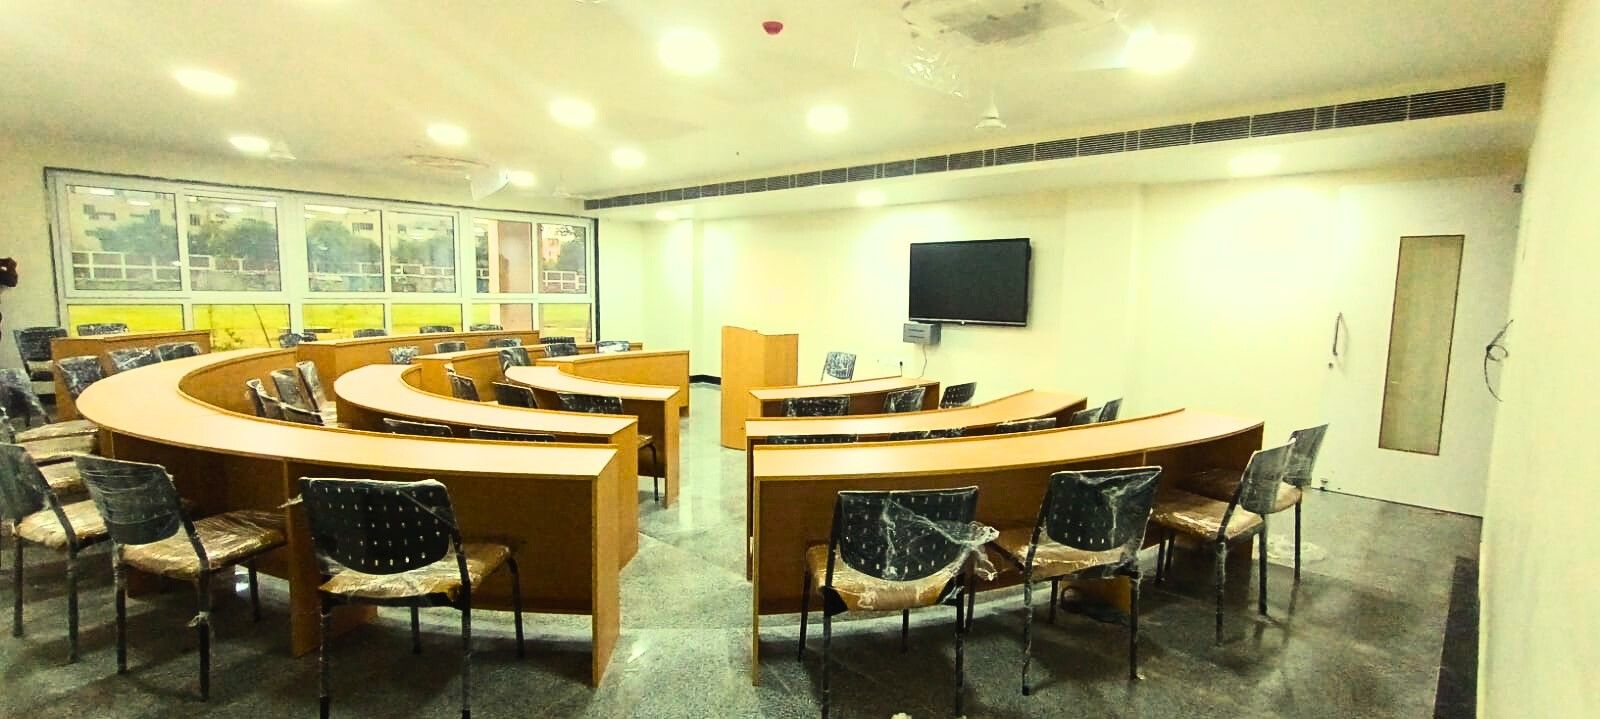 Tribhuvan College of Environment and Development Sciences Classroom